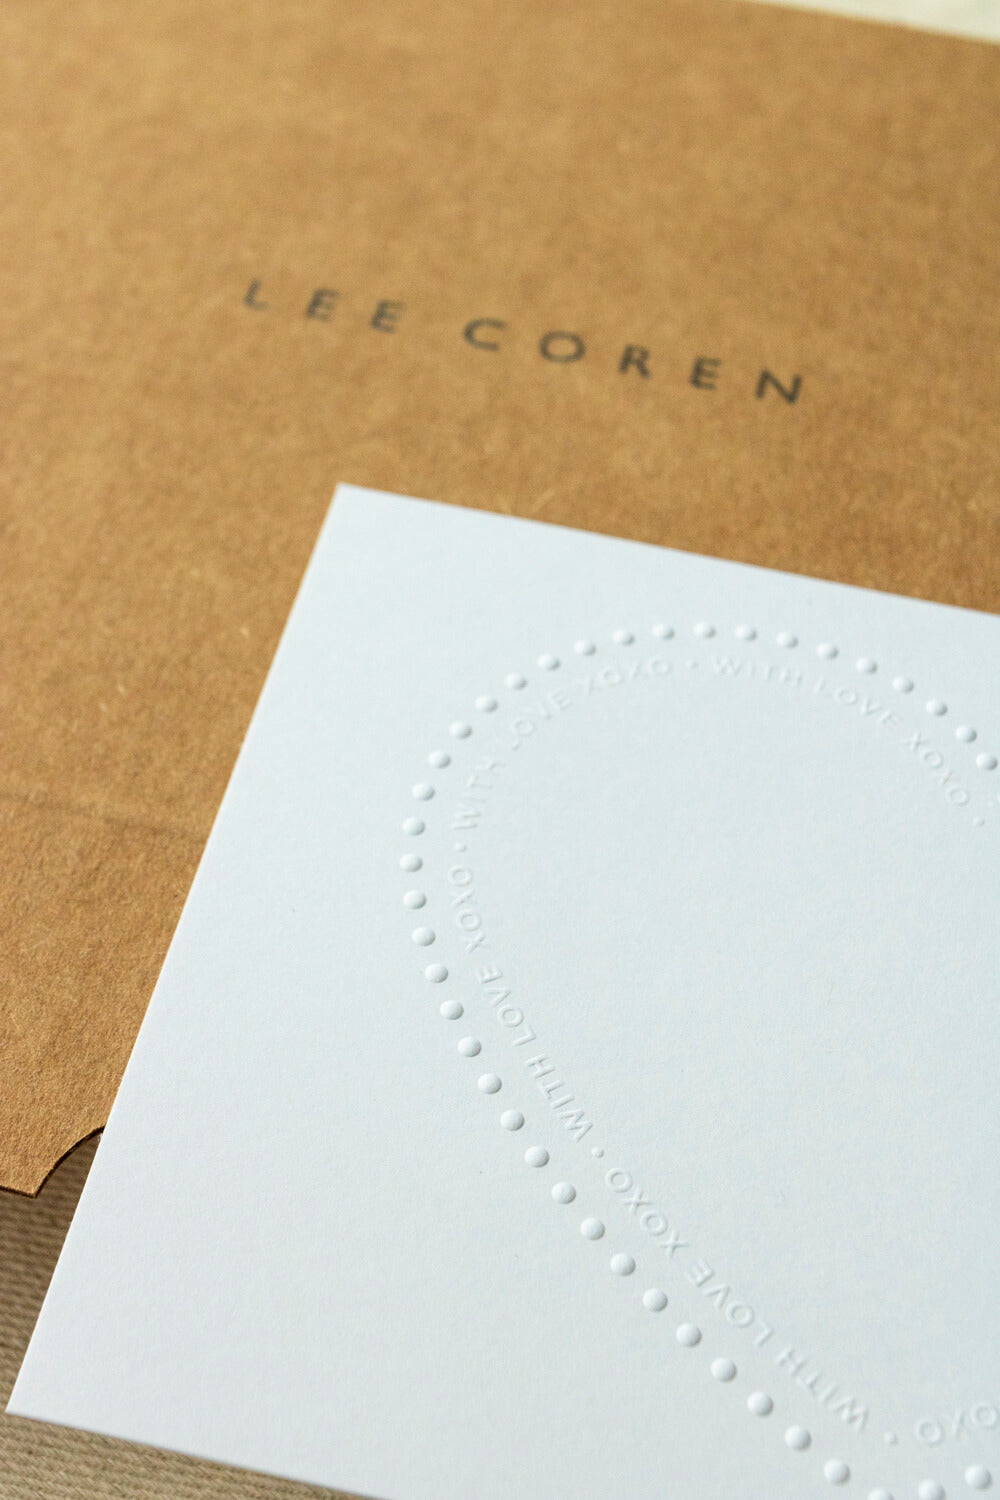 With Love' Notecard | Embossed Card | Lee Coren